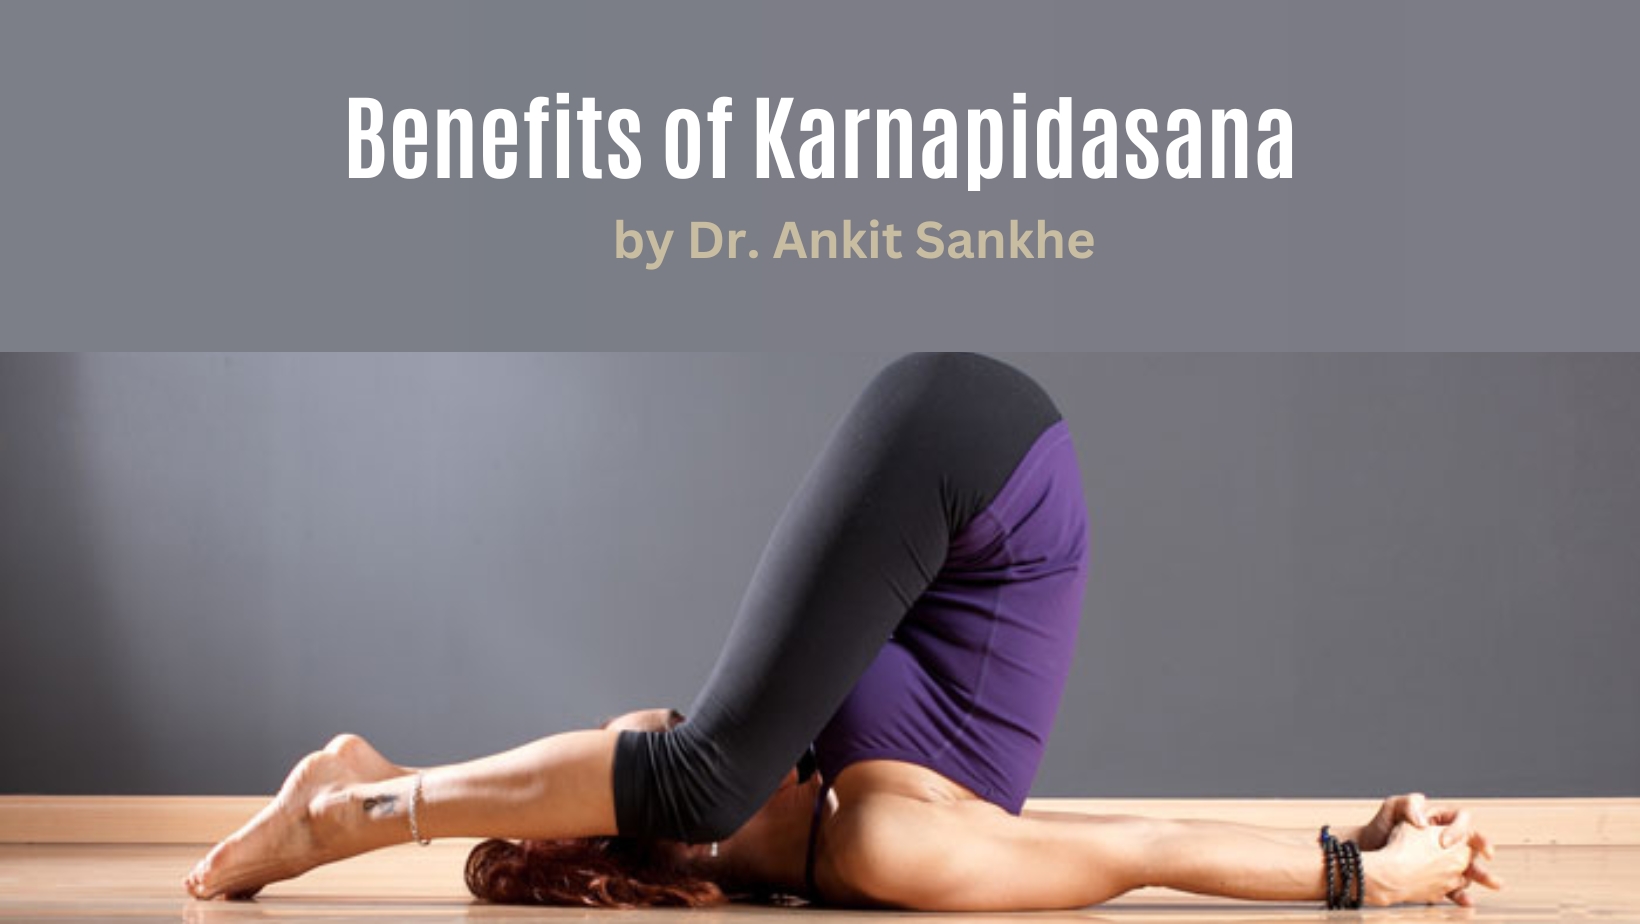 Knees to Ears Pose (Karnapidasana) - Yoga by D